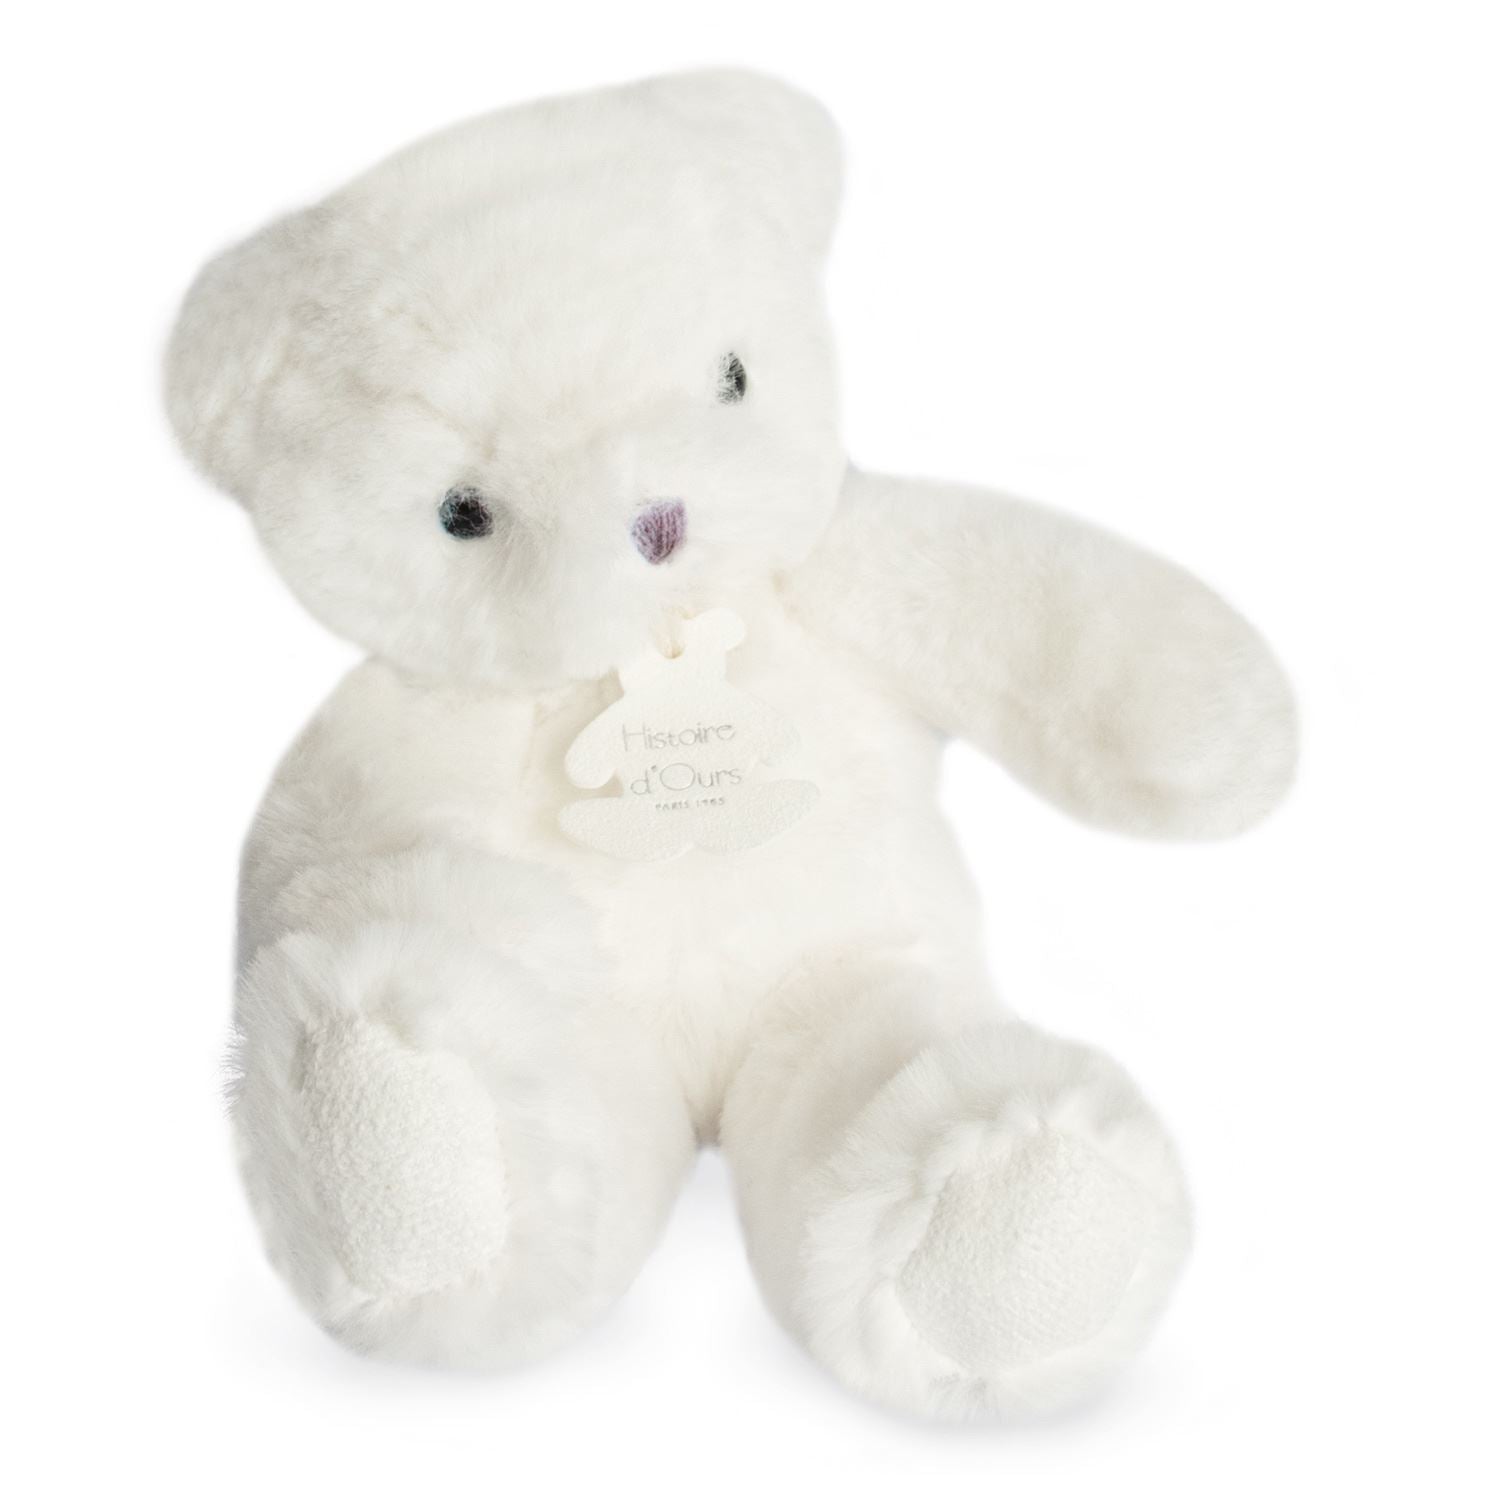 Doudou et Compagnie Histoire D’ours Mini Teddy Bear Assortment of 8 Bears Plushies